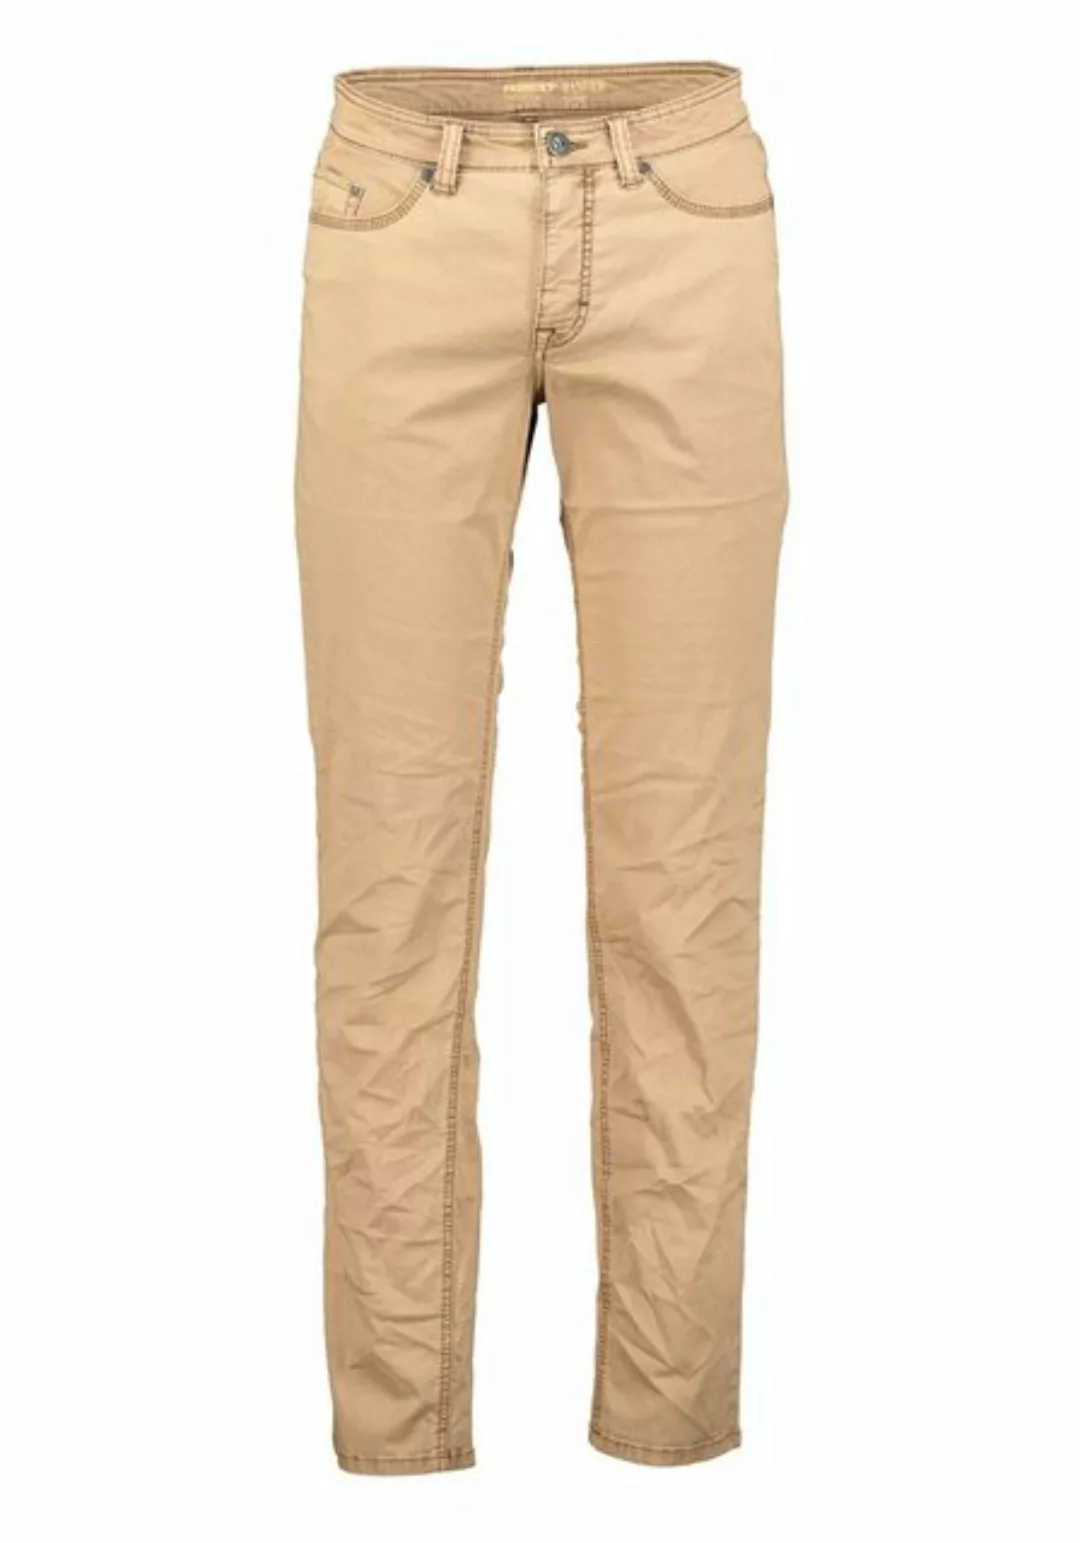 Paddock's 5-Pocket-Jeans PADDOCKS RANGER PIPE camel beige 80120 4838.2300 günstig online kaufen